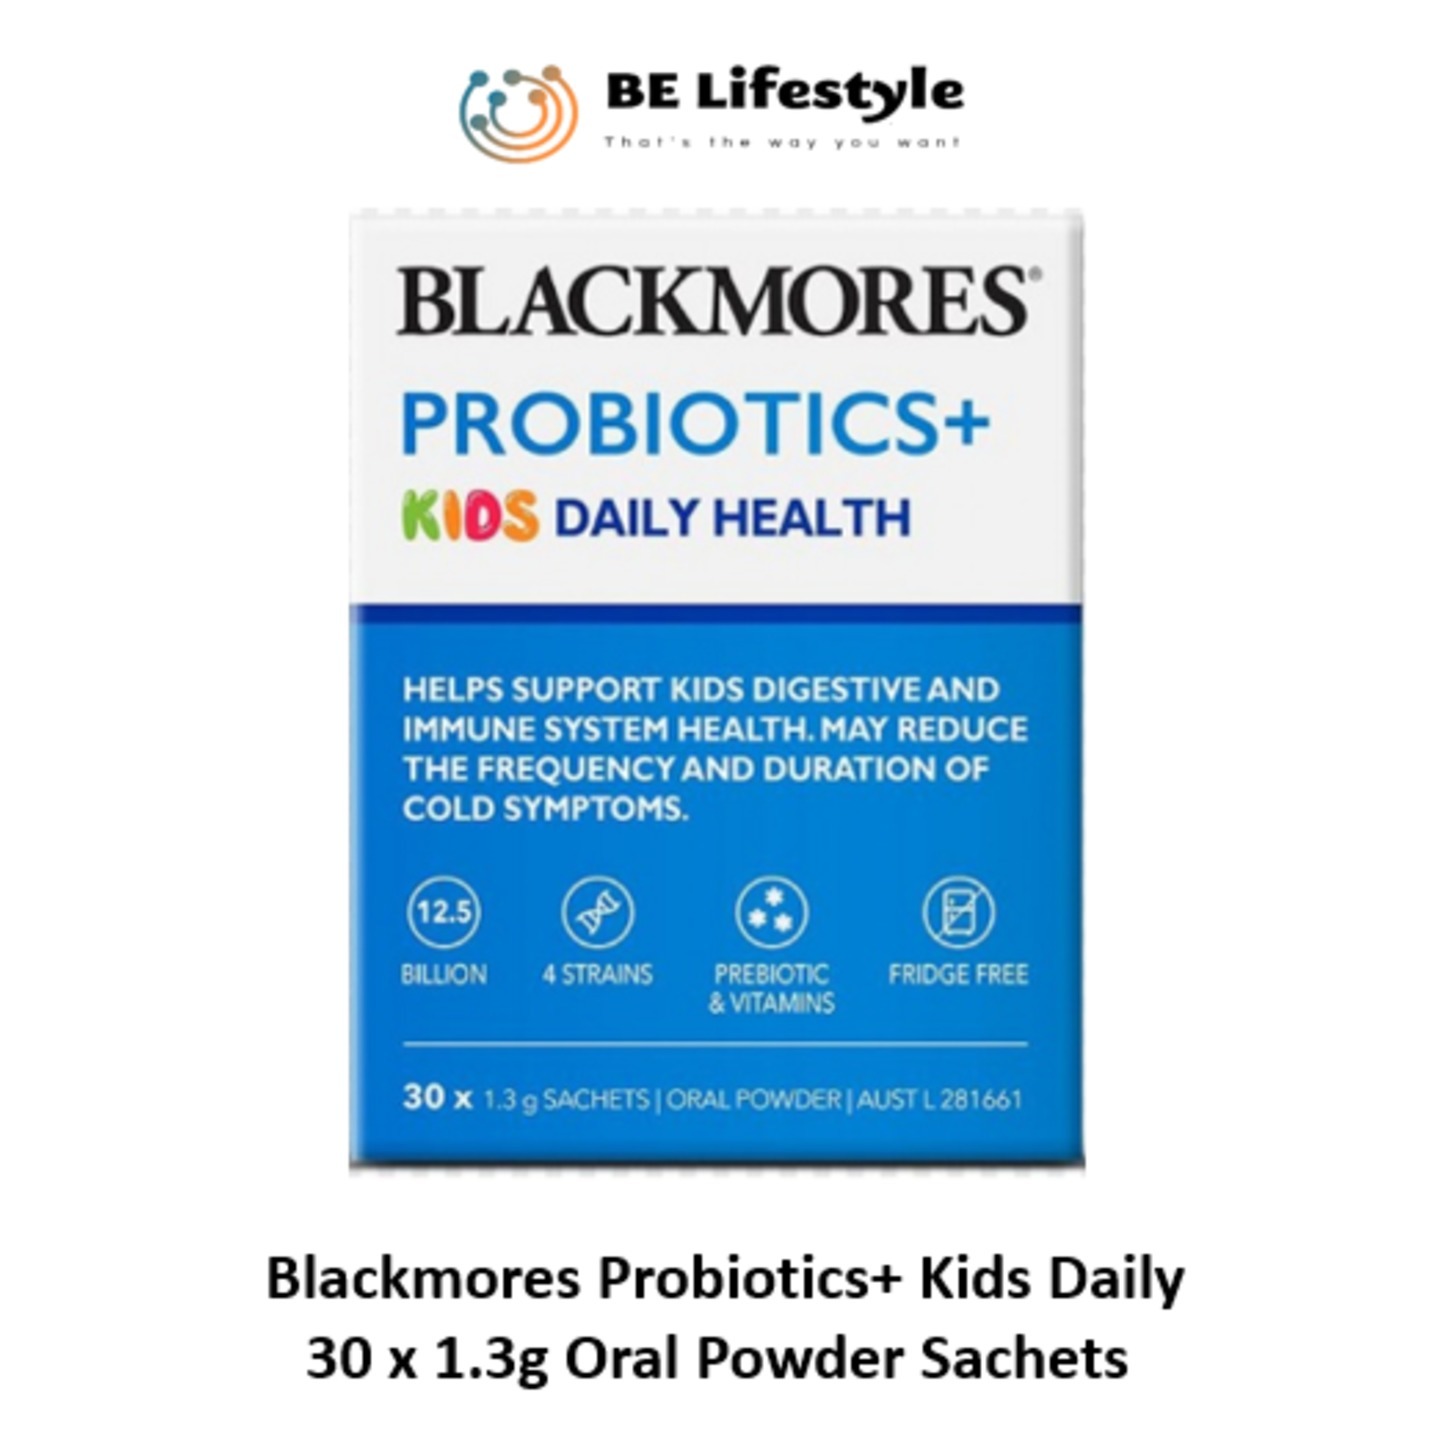 Blackmores Probiotics+ Kids Daily   30 x 1.3g Oral Powder Sachets